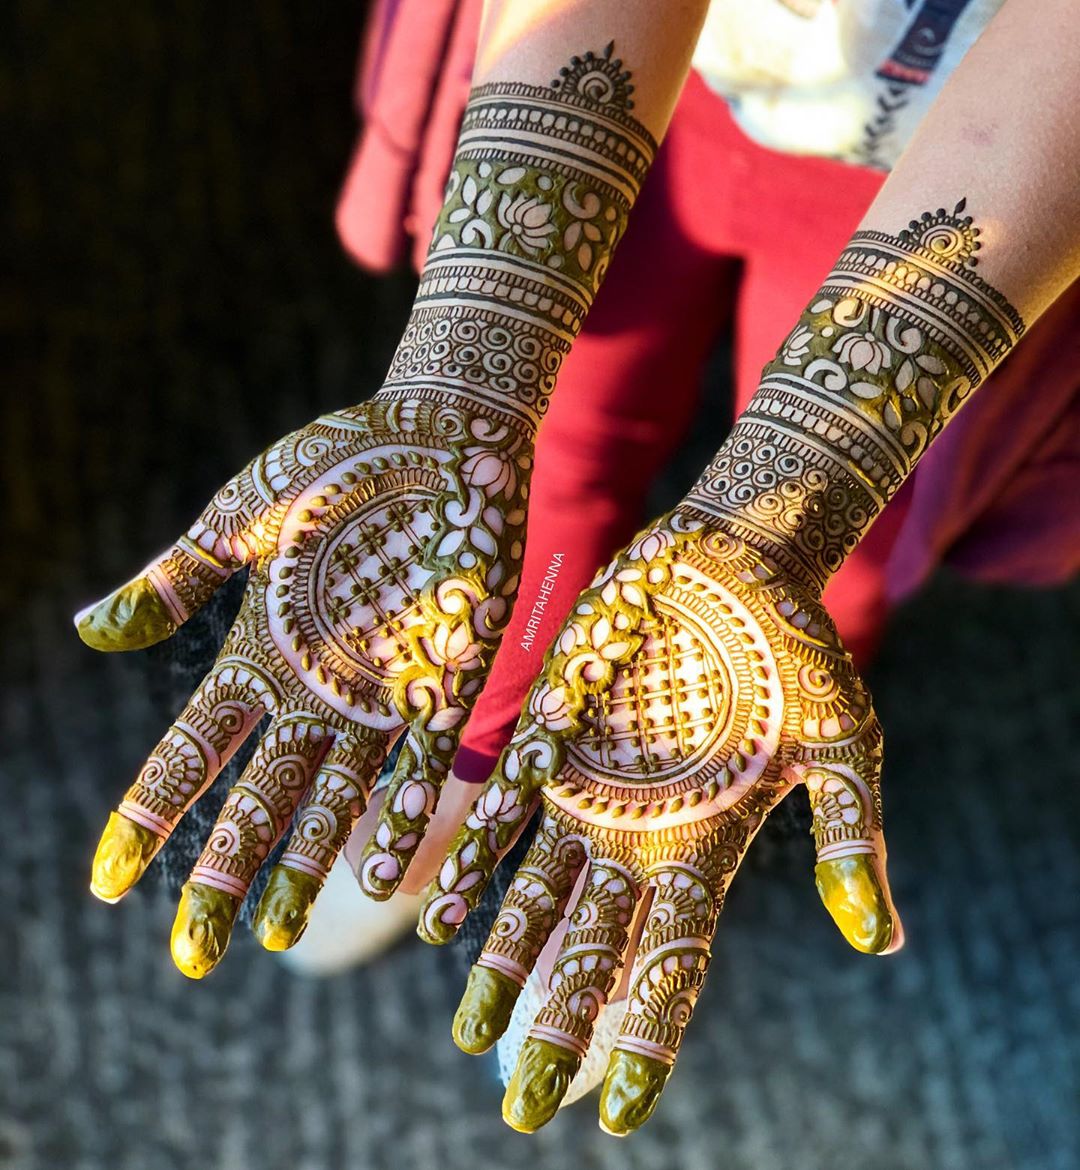 Amusing mirror Marwari style henna for amorous brides